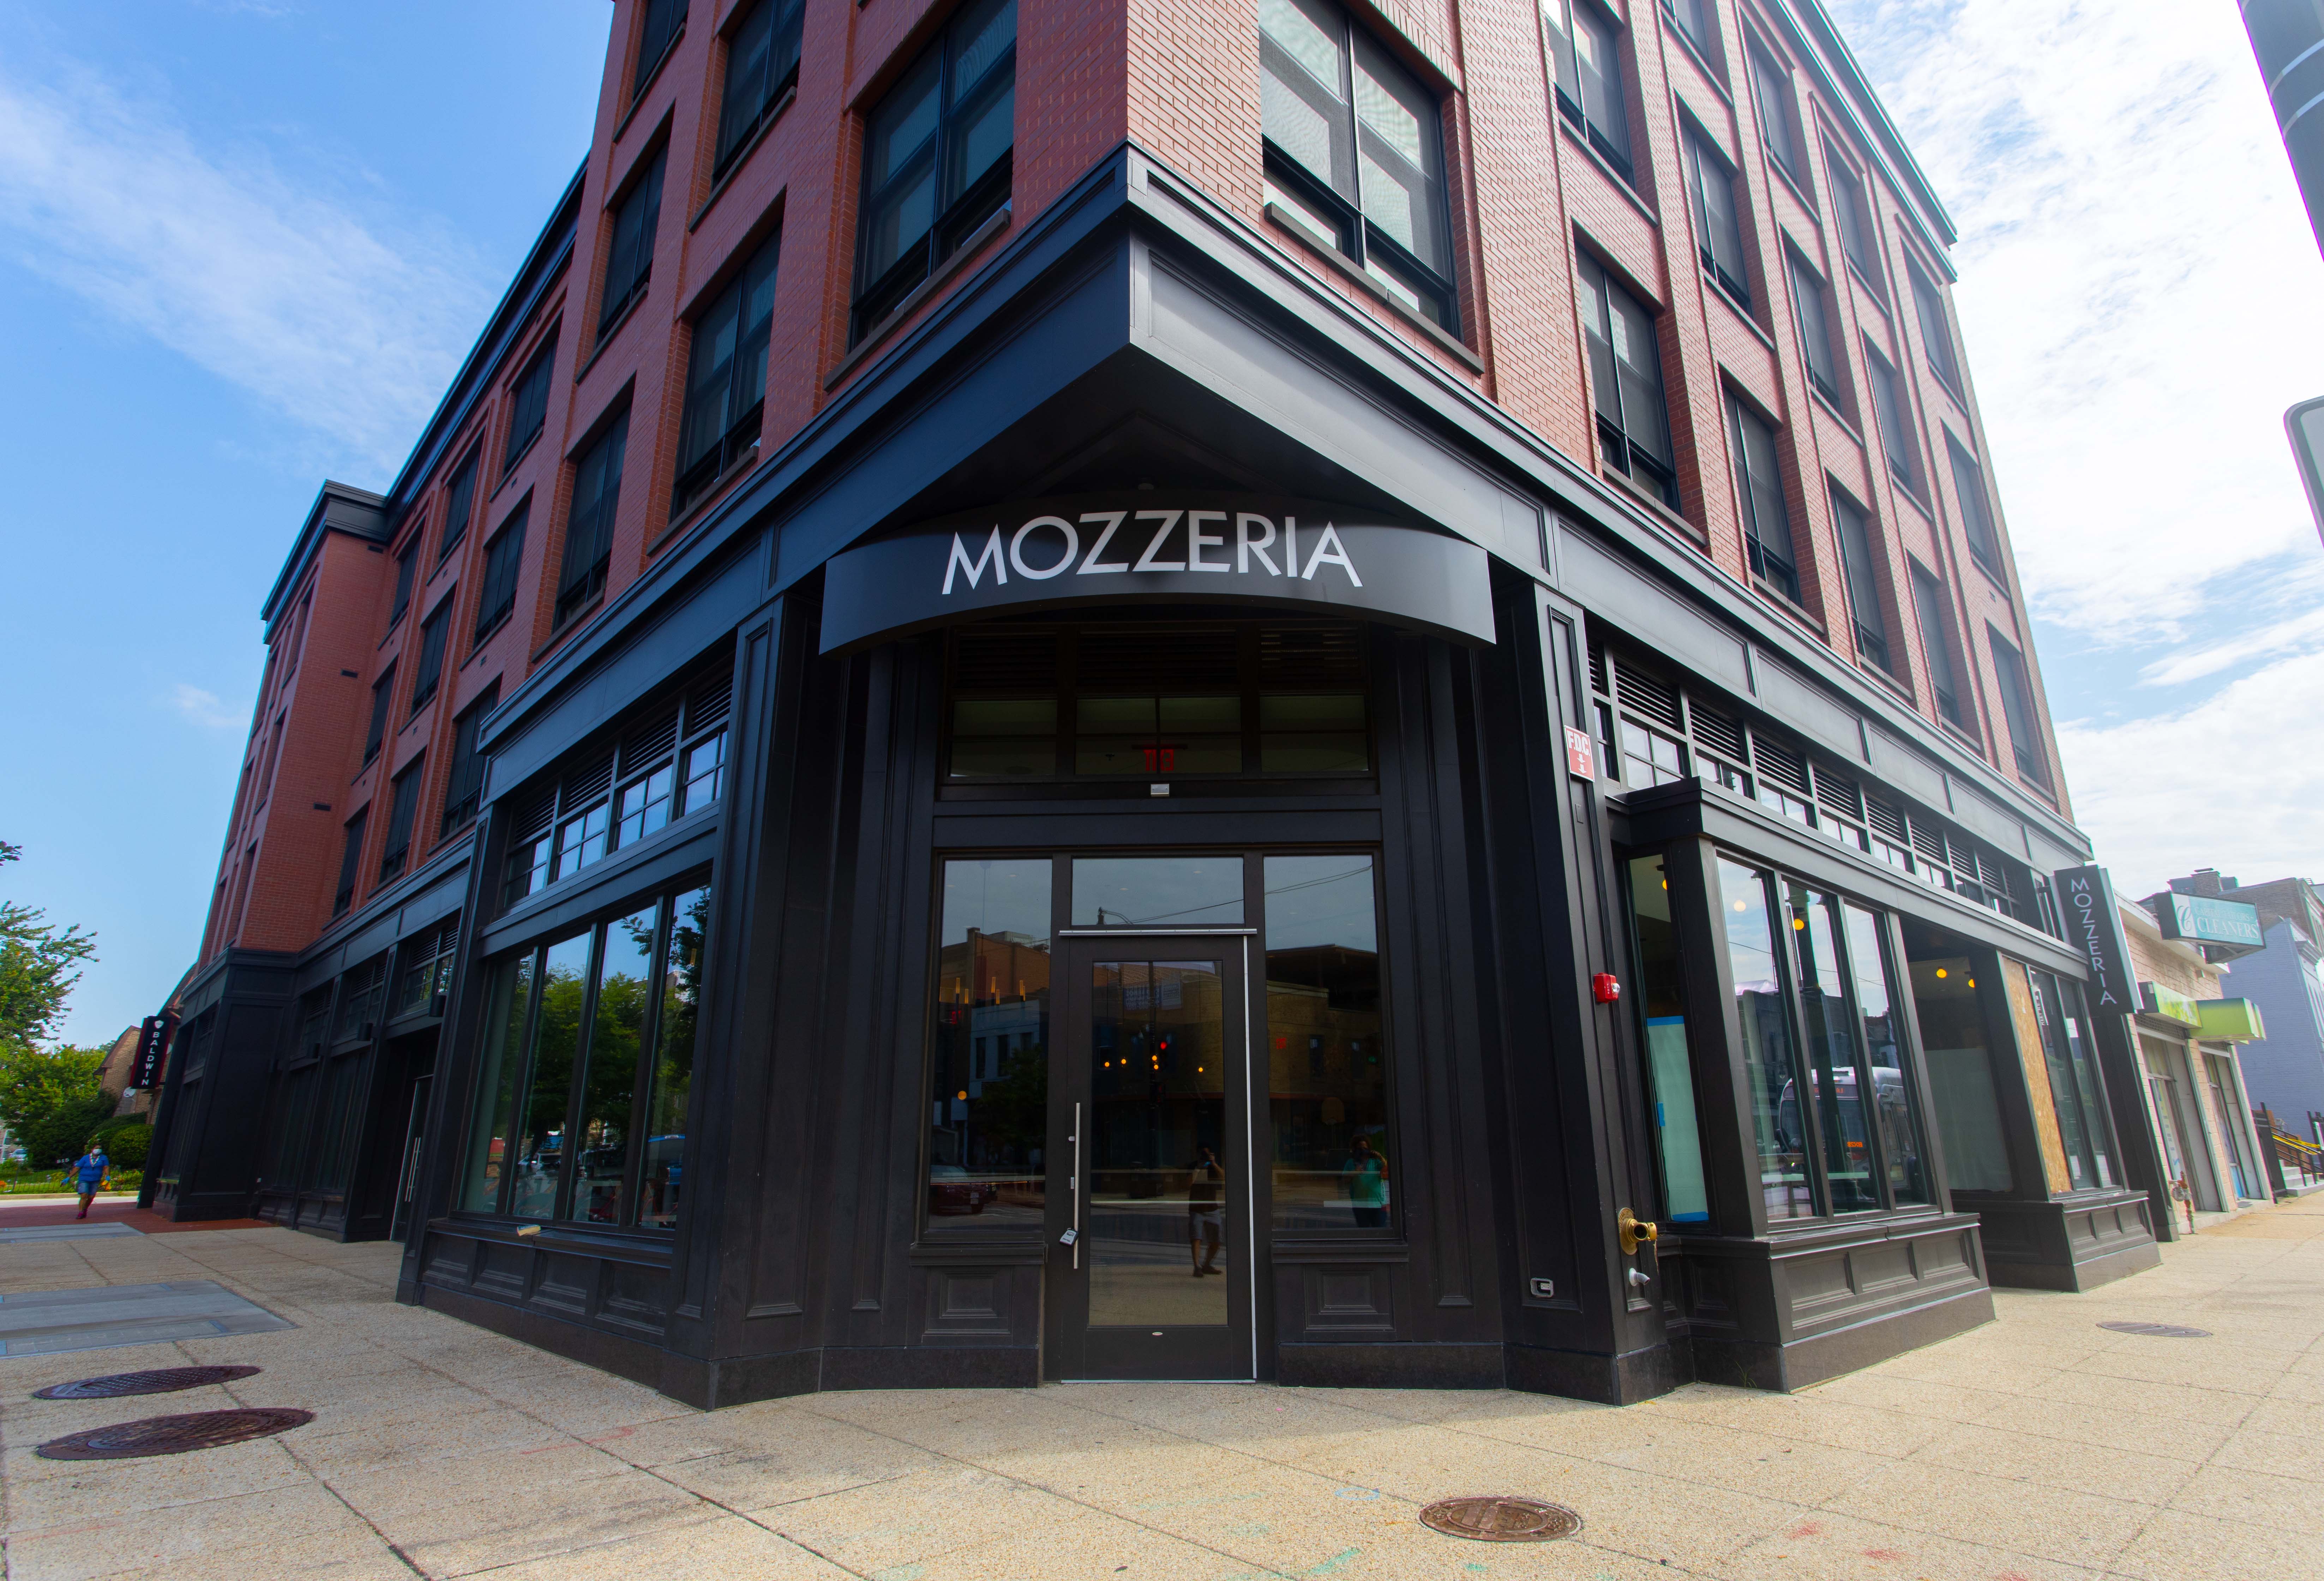 Mozzeria's exterior at the corner of H Street NE and 13th Street NE